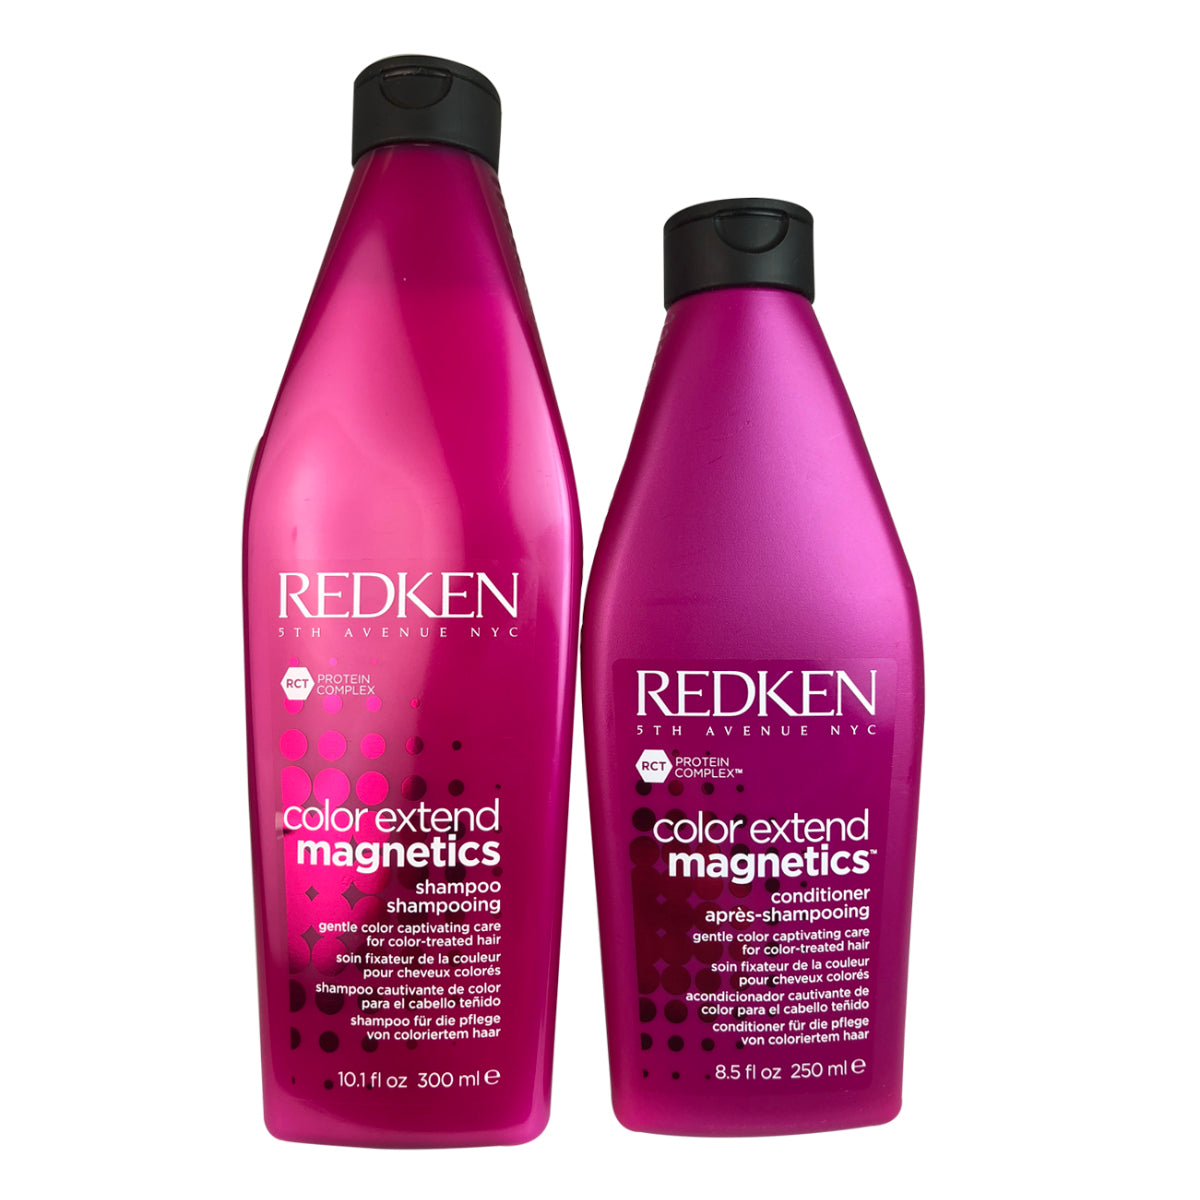 Redken Color Extend Magnetics Shampoo and Conditioner Duo 8.5 oz - 10.1oz